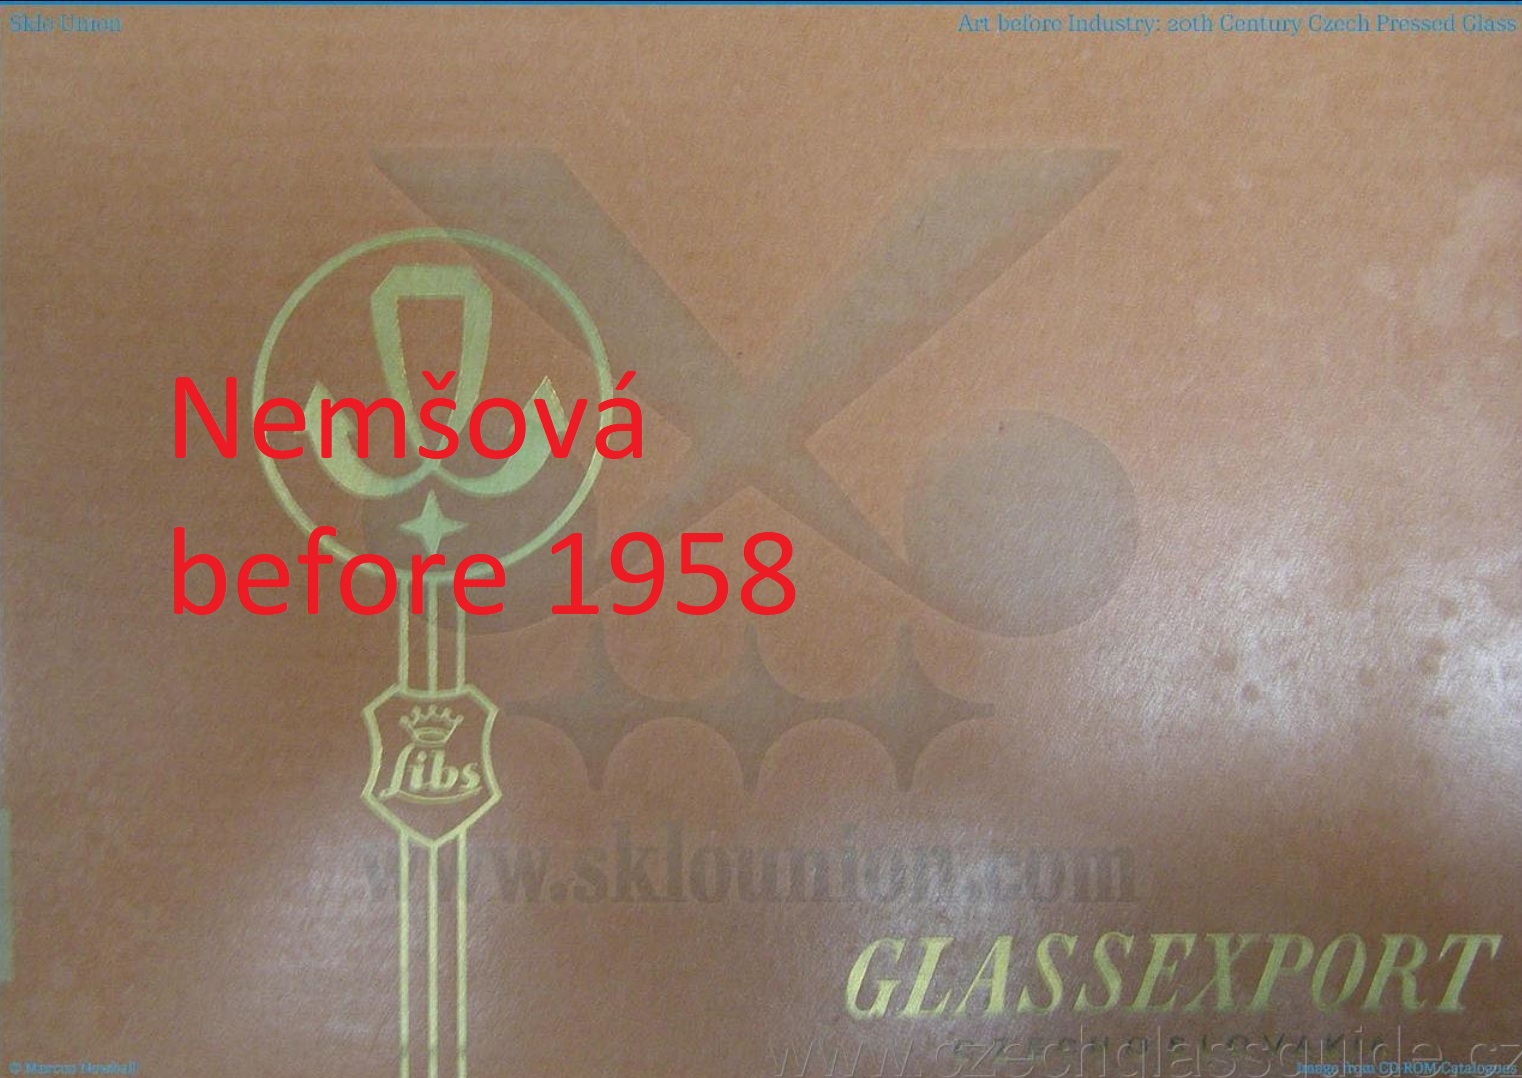 Nemšová - Glassexport before 1958